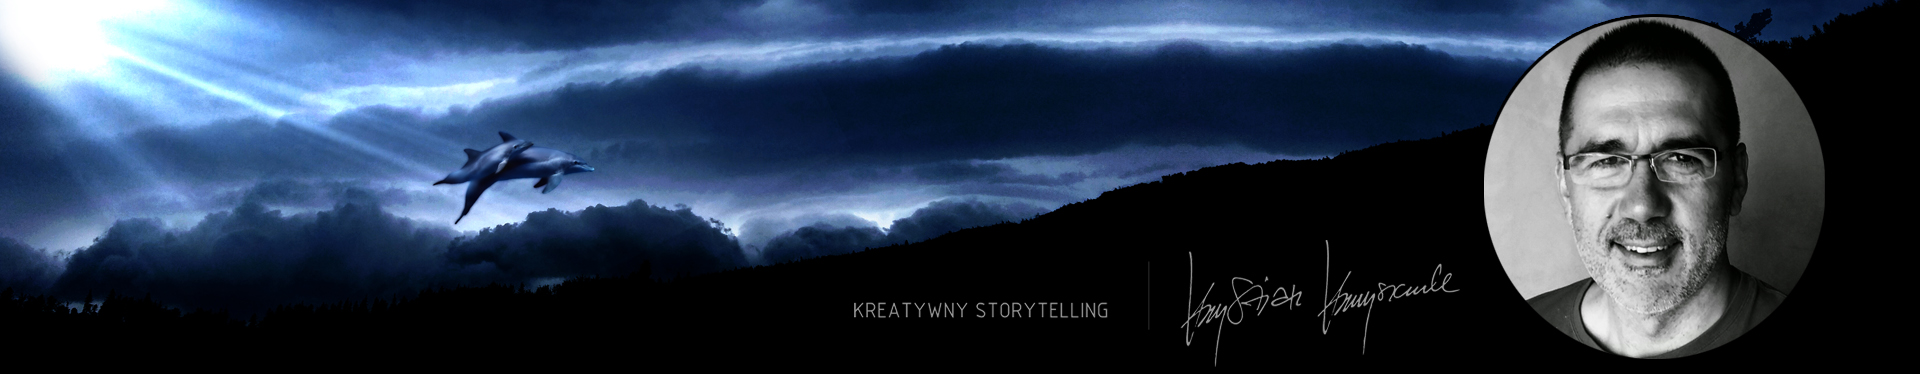 Kreatywny Storytelling | Krystian Krzyszczuk